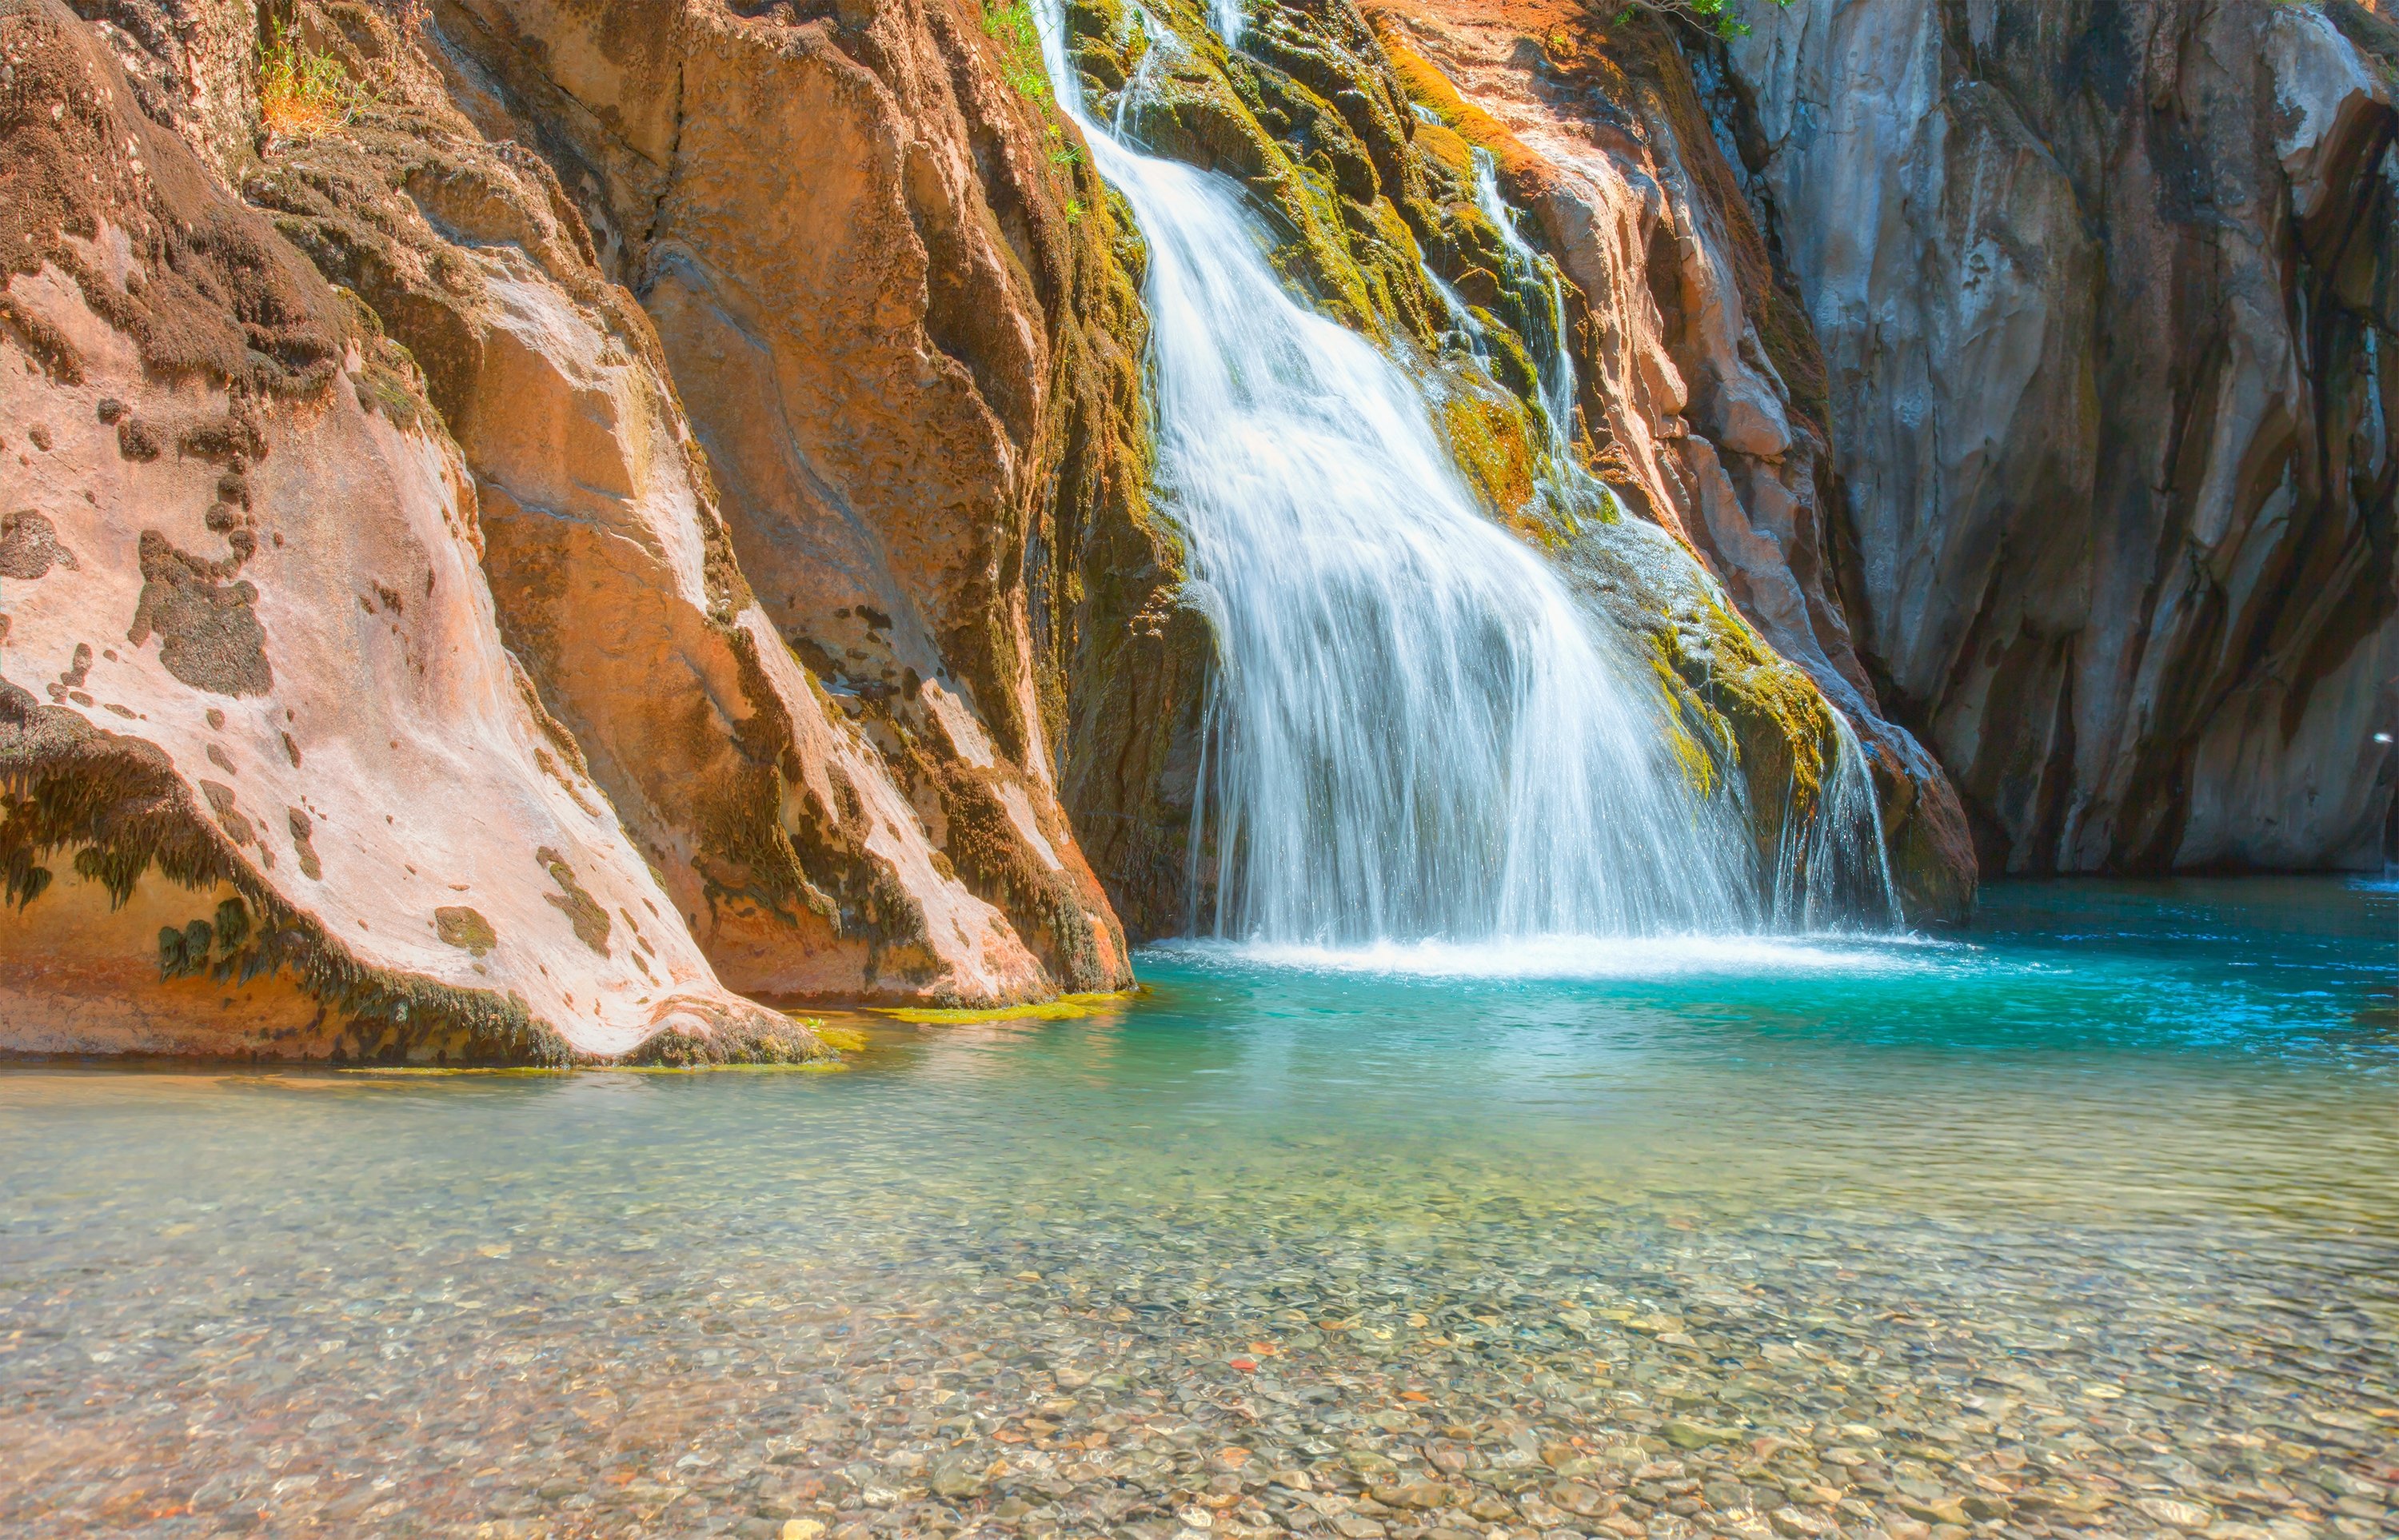 Turkey's most beautiful waterfalls | Daily Sabah